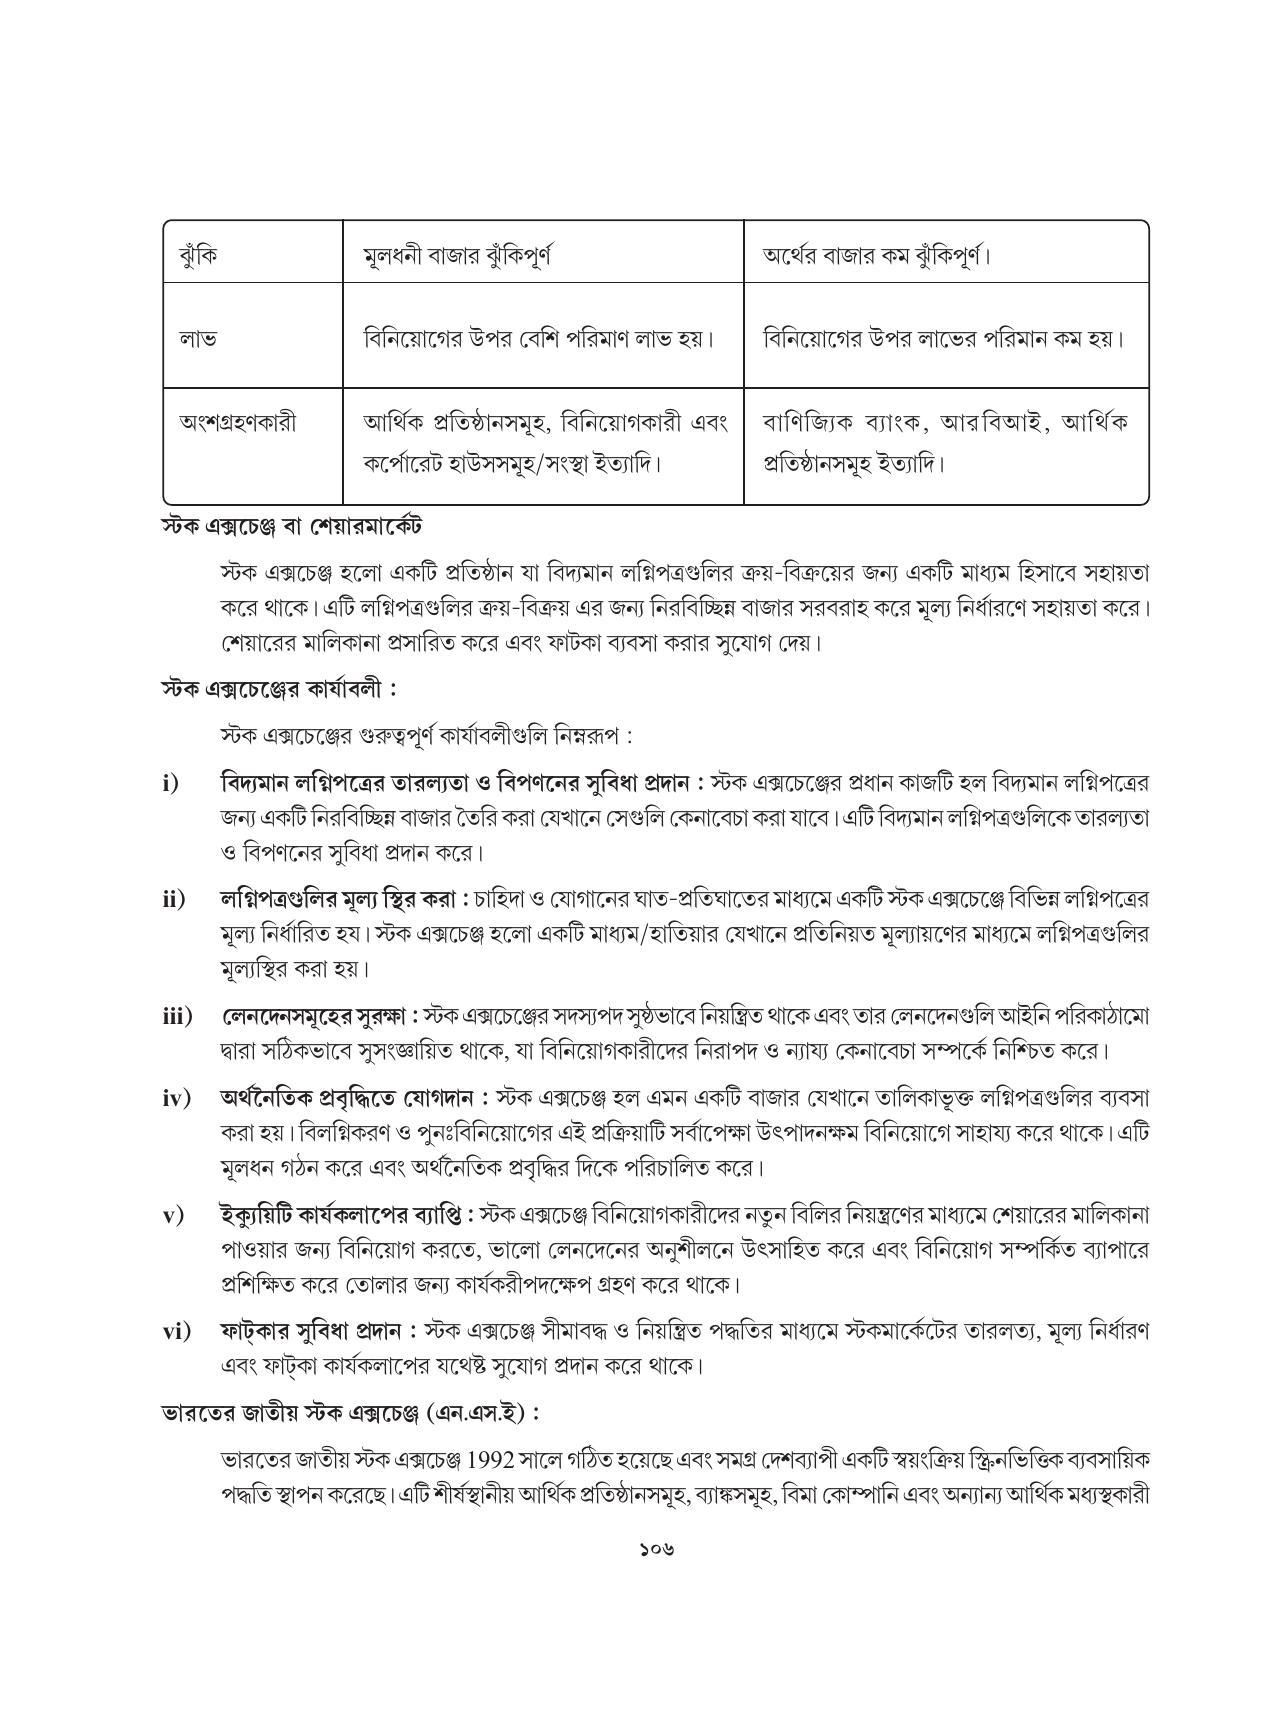 Tripura Board Class 12 Karbari Shastra Bengali Version Workbooks - Page 106